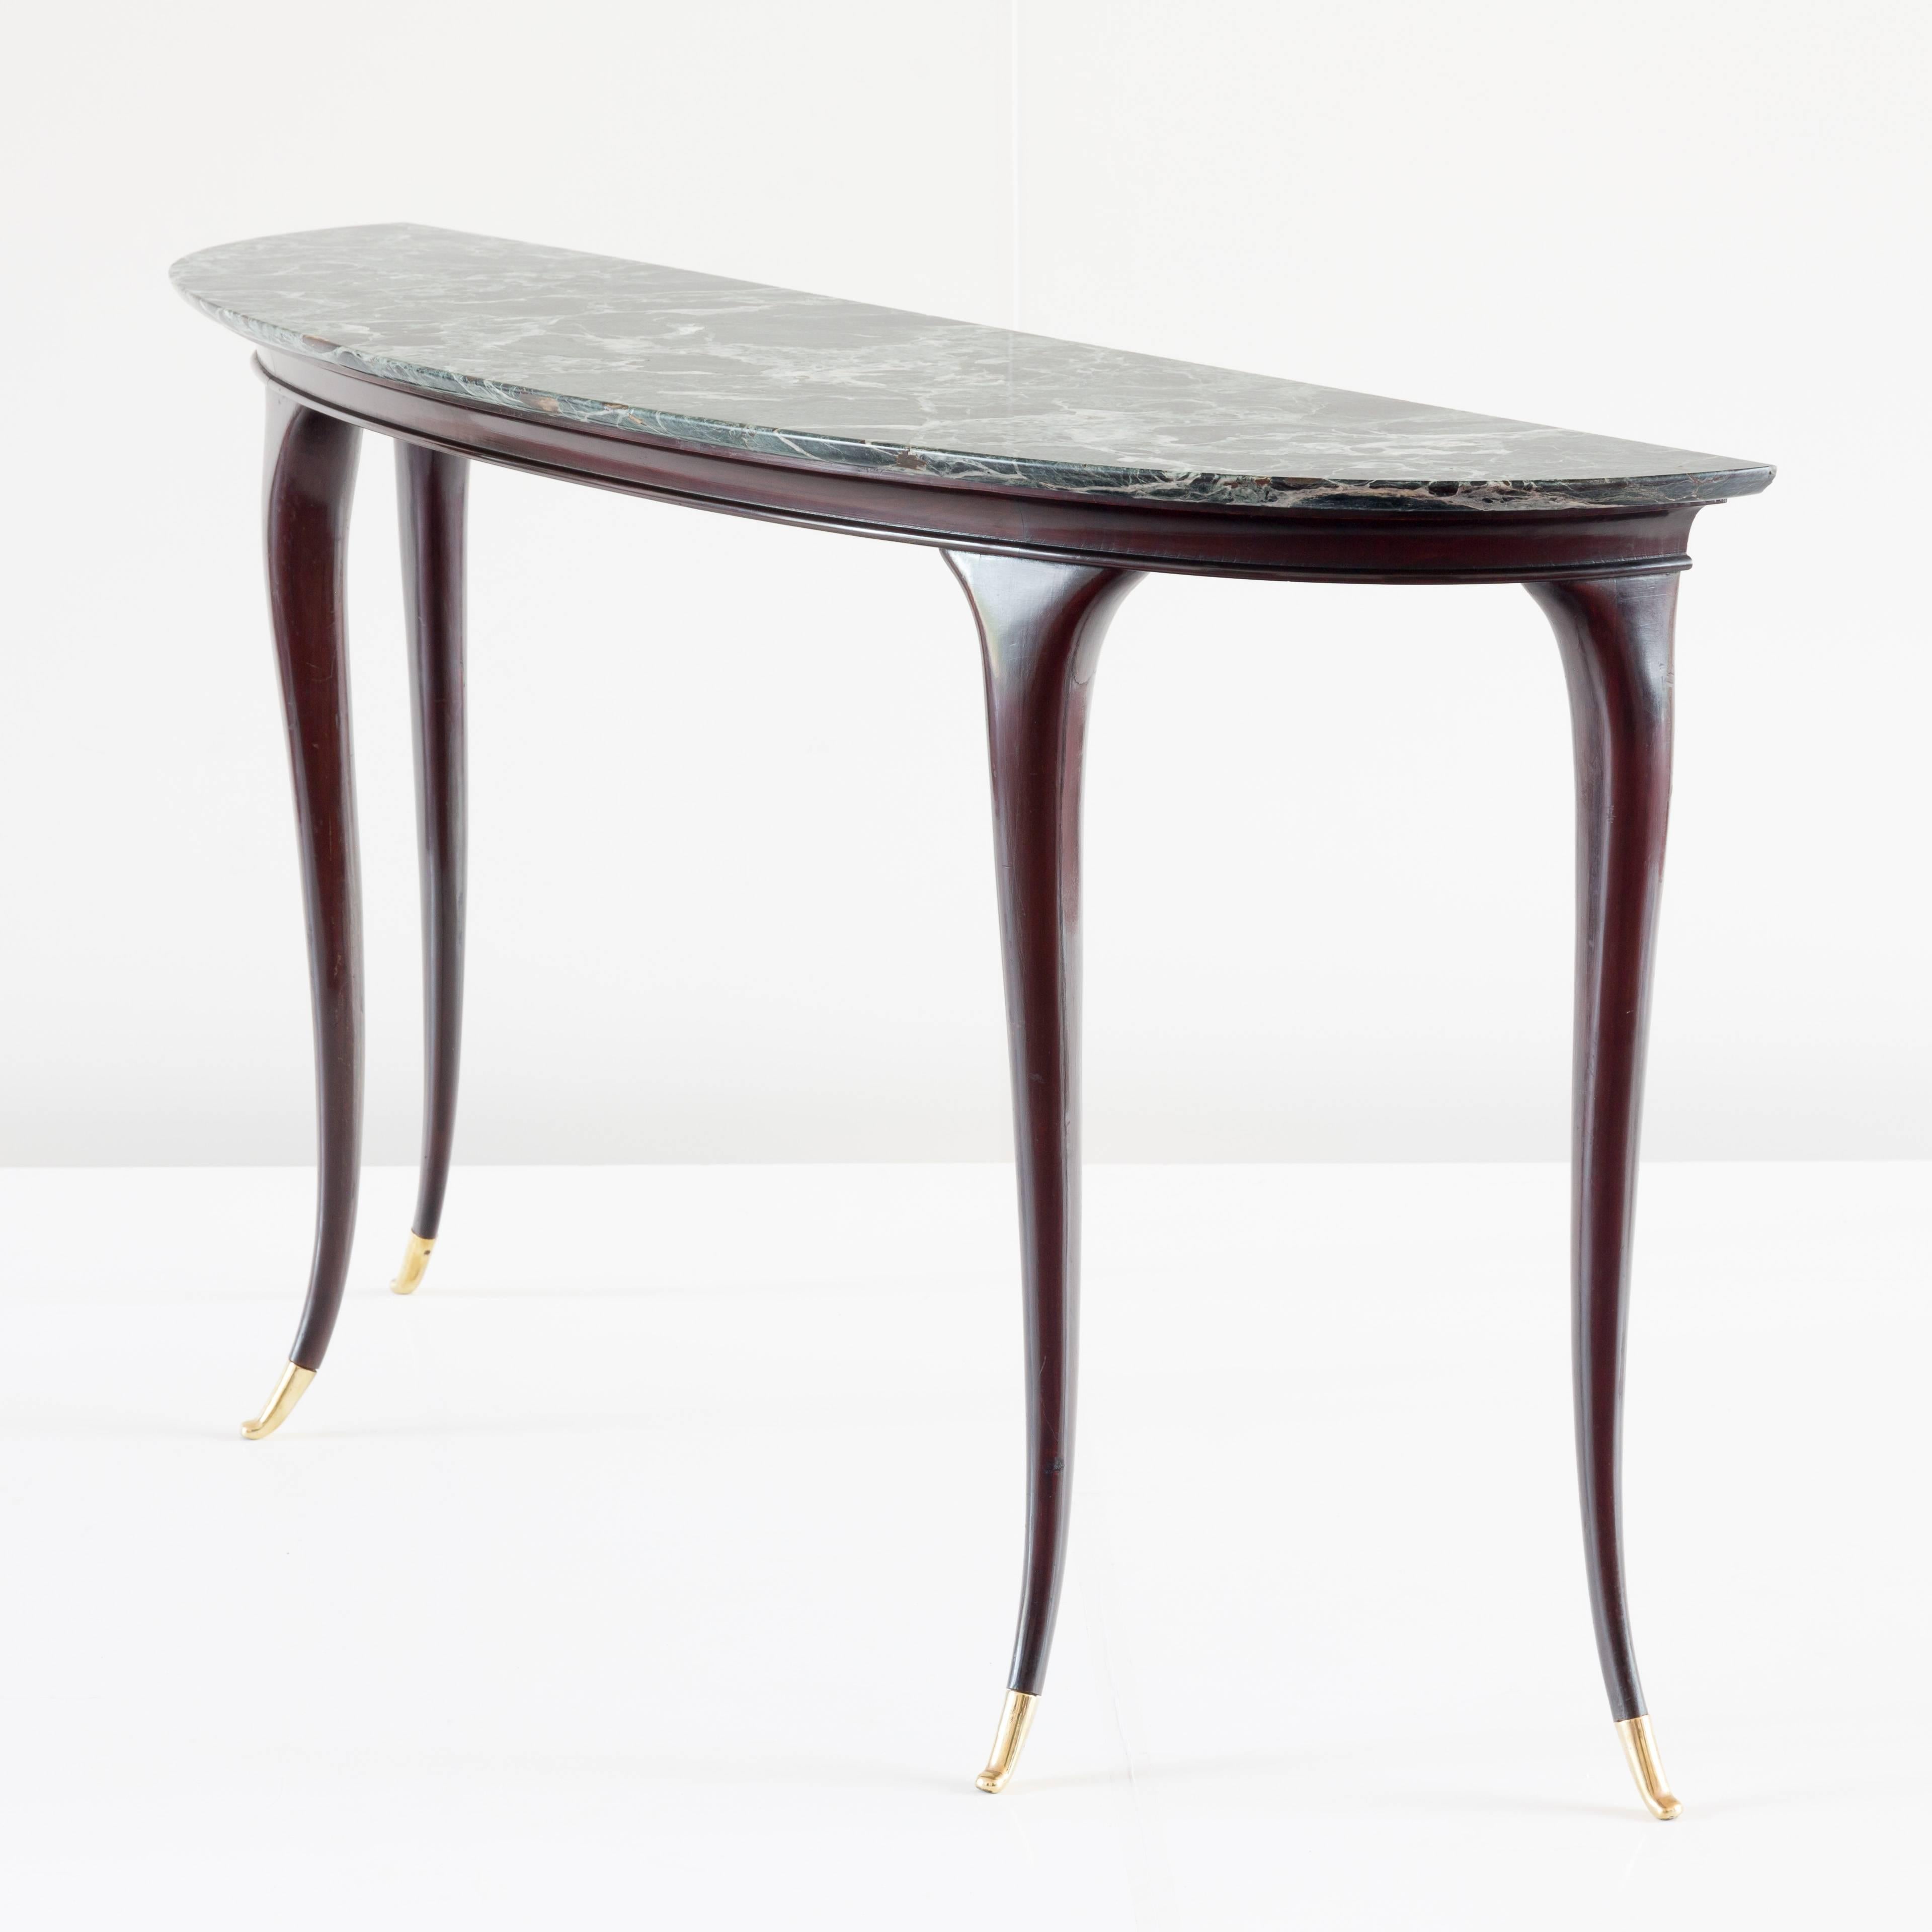 Important rare console table designed by Guglielmo Ulrich, 1950.

Mahogany, brass,